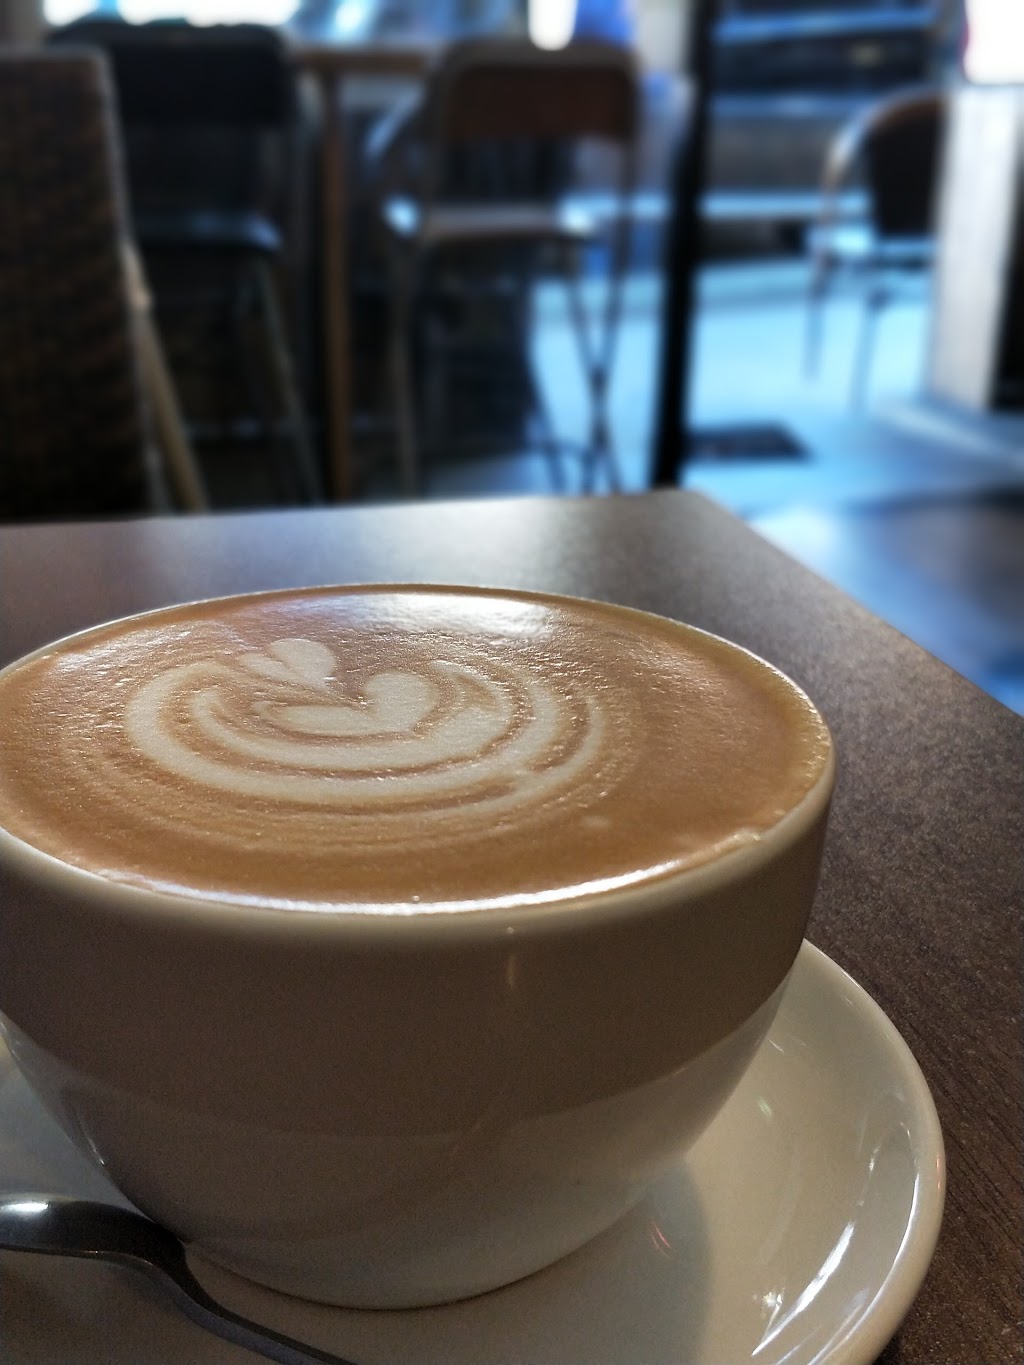 The Laneway Espresso | cafe | 9a Railway Ave, Wahroonga NSW 2076, Australia